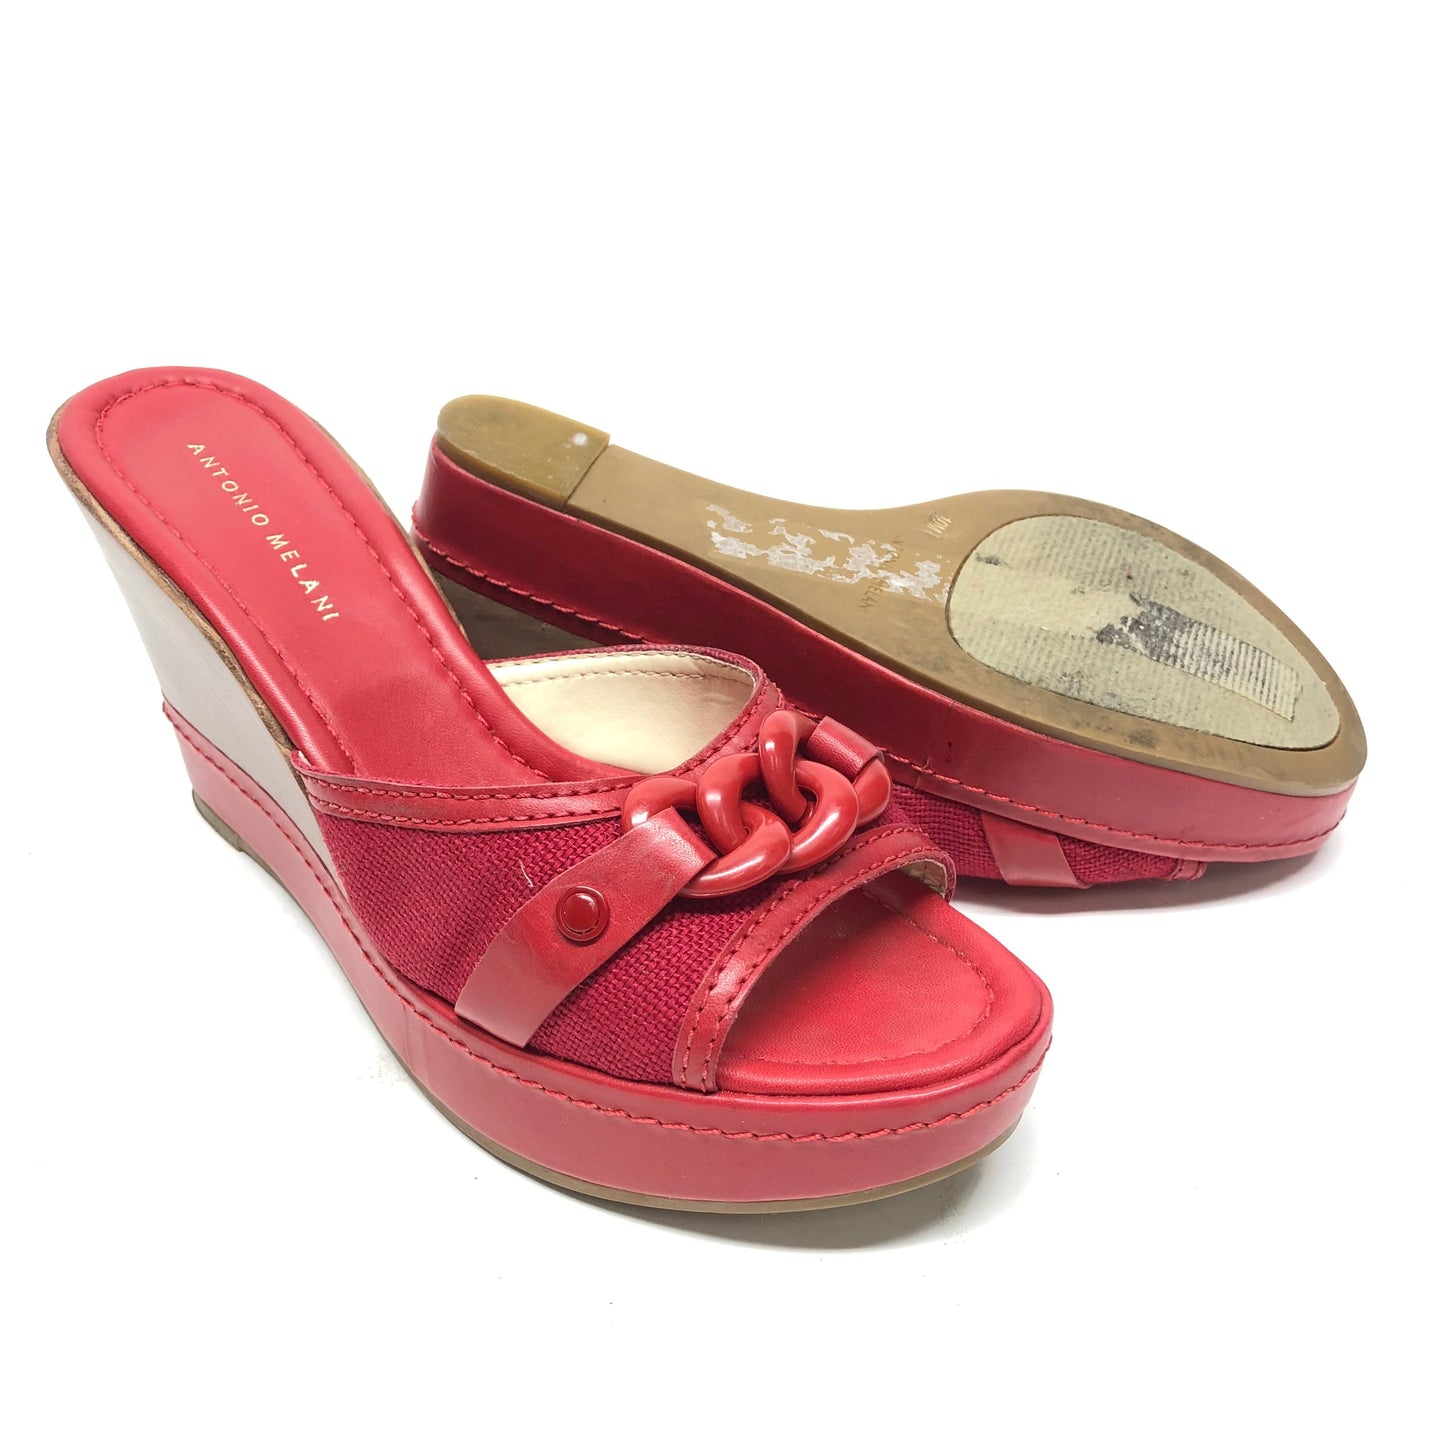 Red Shoes Heels Wedge Antonio Melani, Size 10